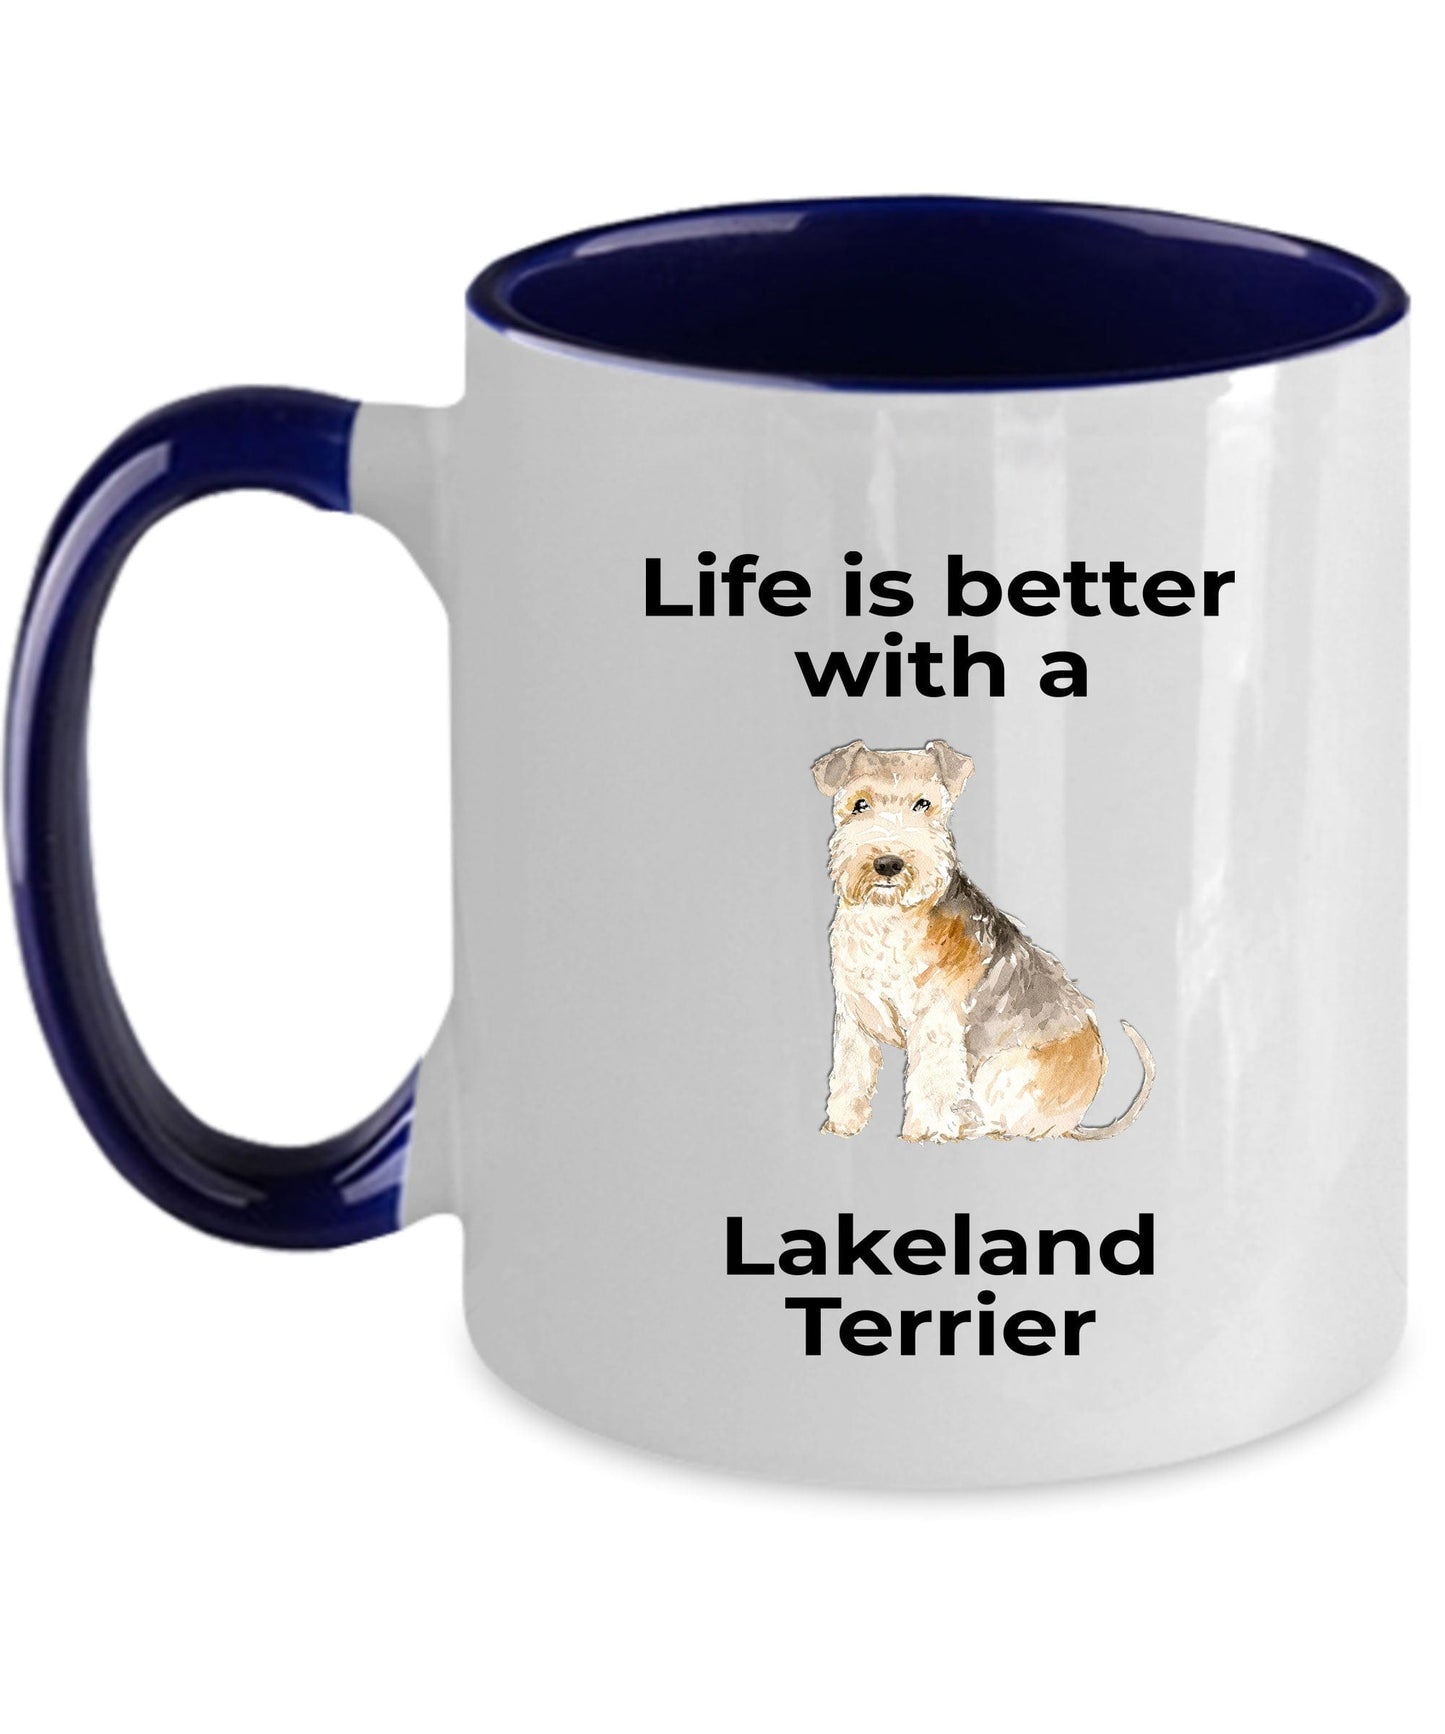 Lakeland Terrier Dog Coffee Mug - Life is Better